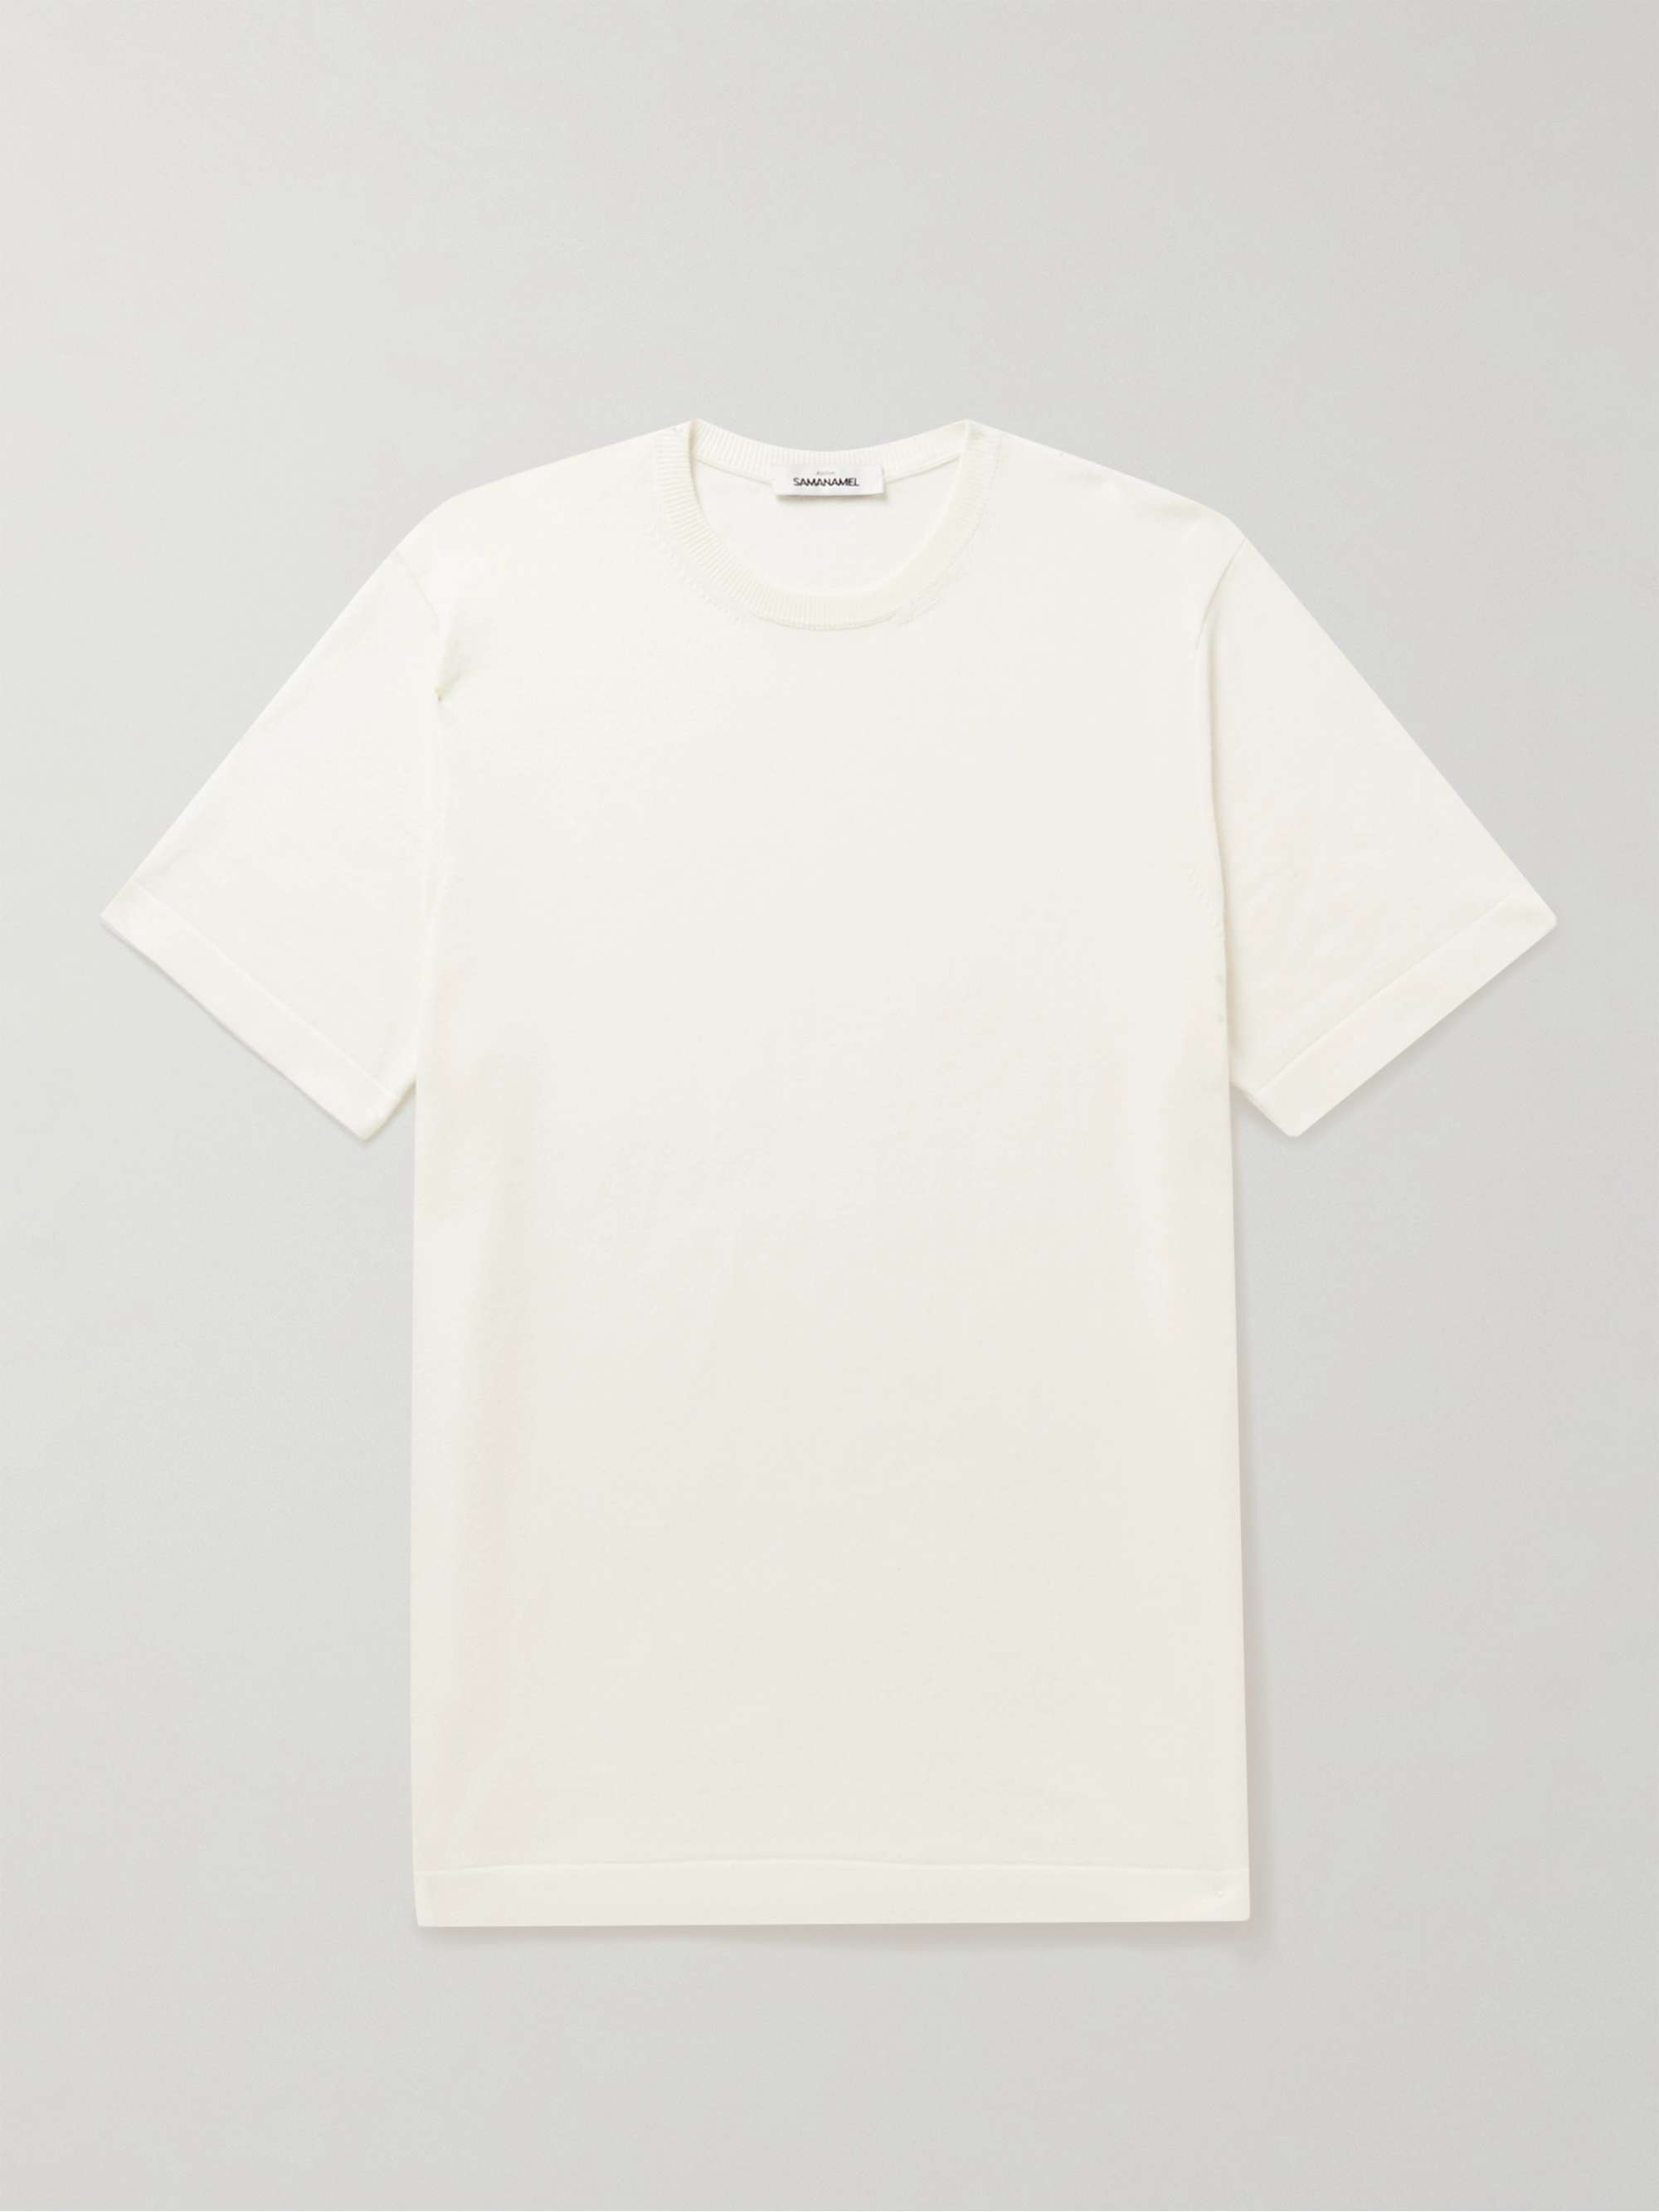 SAMAN AMEL Knitted Cotton T-Shirt